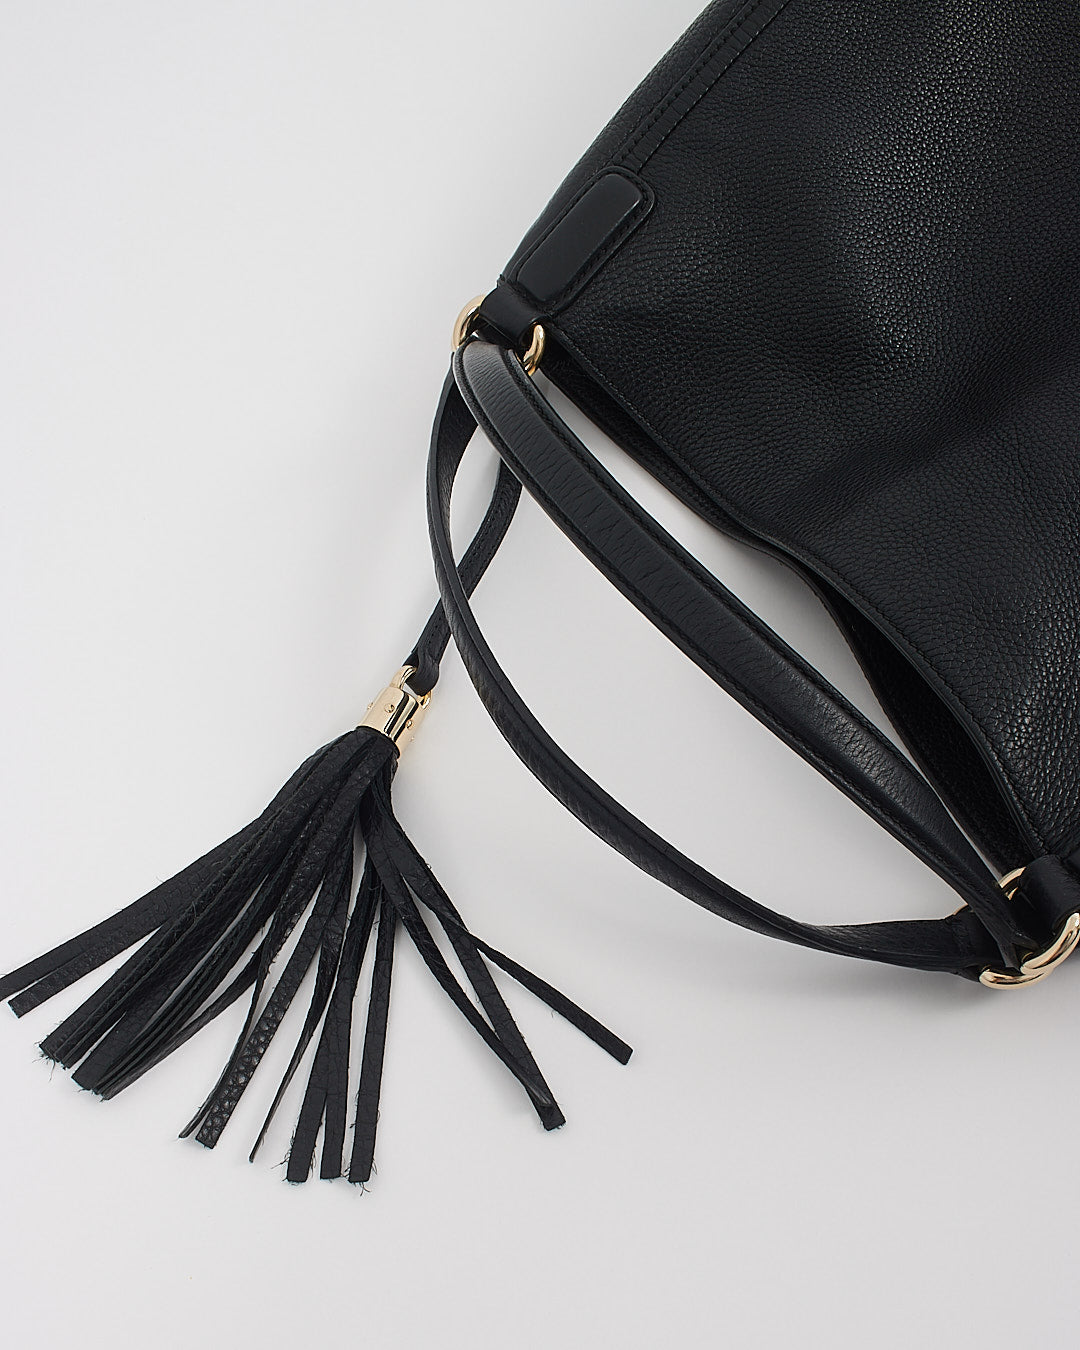 Gucci Black Pebbled Leather Large Soho Tote Handbag